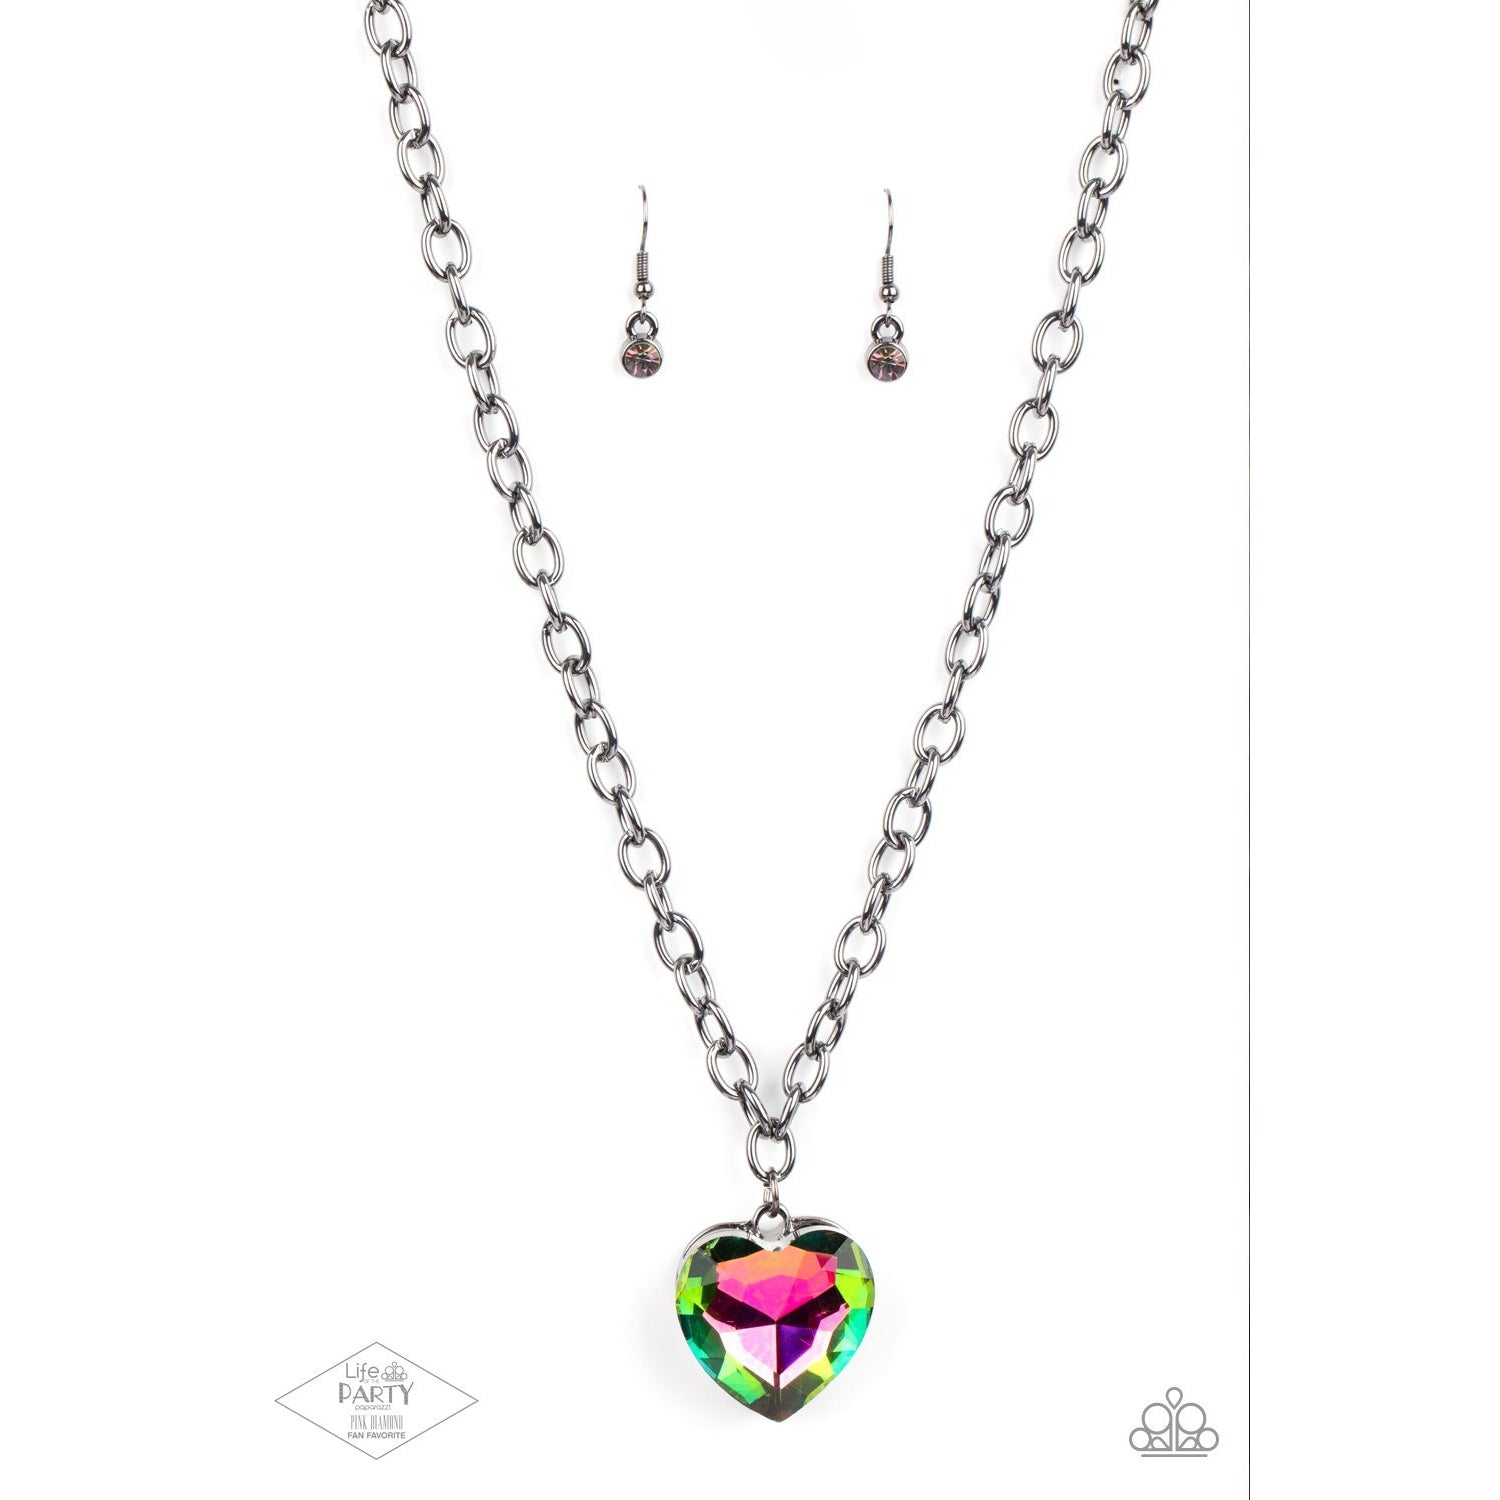 Flirtatiously Flashy - Multi Oil Spill Necklace - Paparazzi Accessories - GlaMarous Titi Jewels